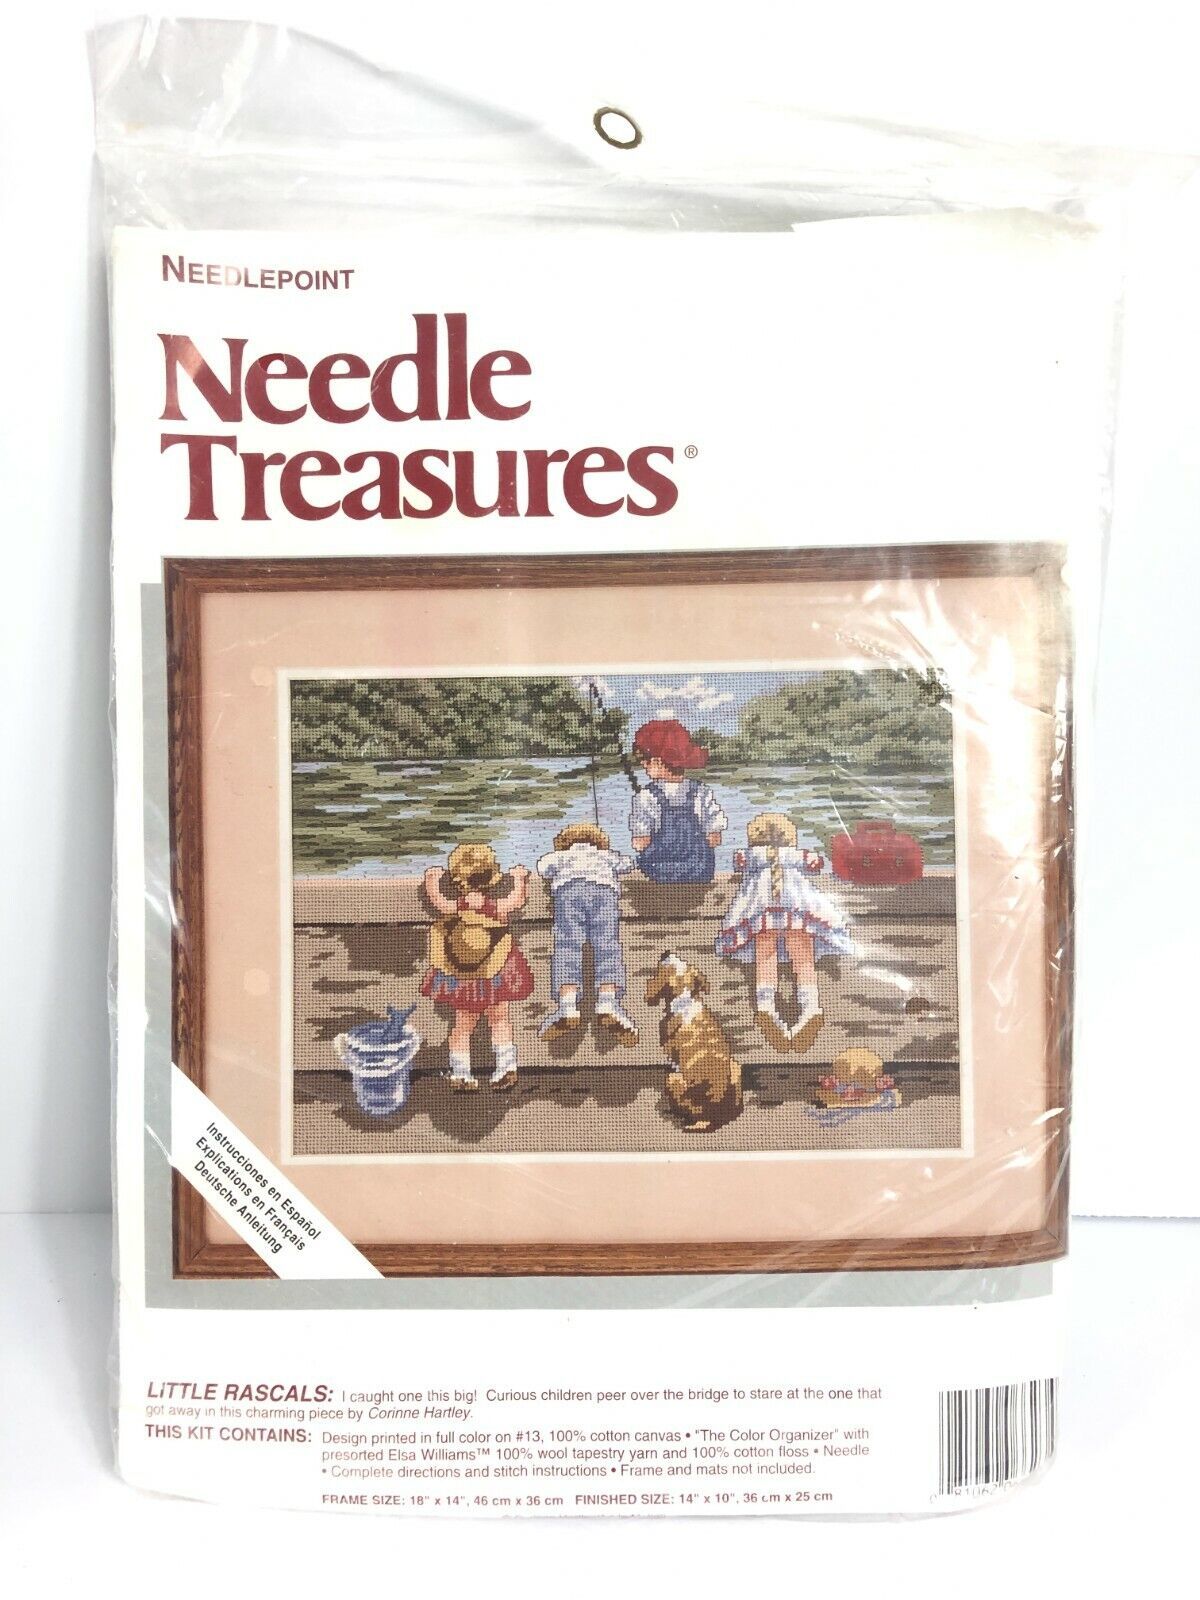 Little Rascals Kit JCA Needle Treasures 14x10 06623 Hartley New Unopened Rare - $63.52